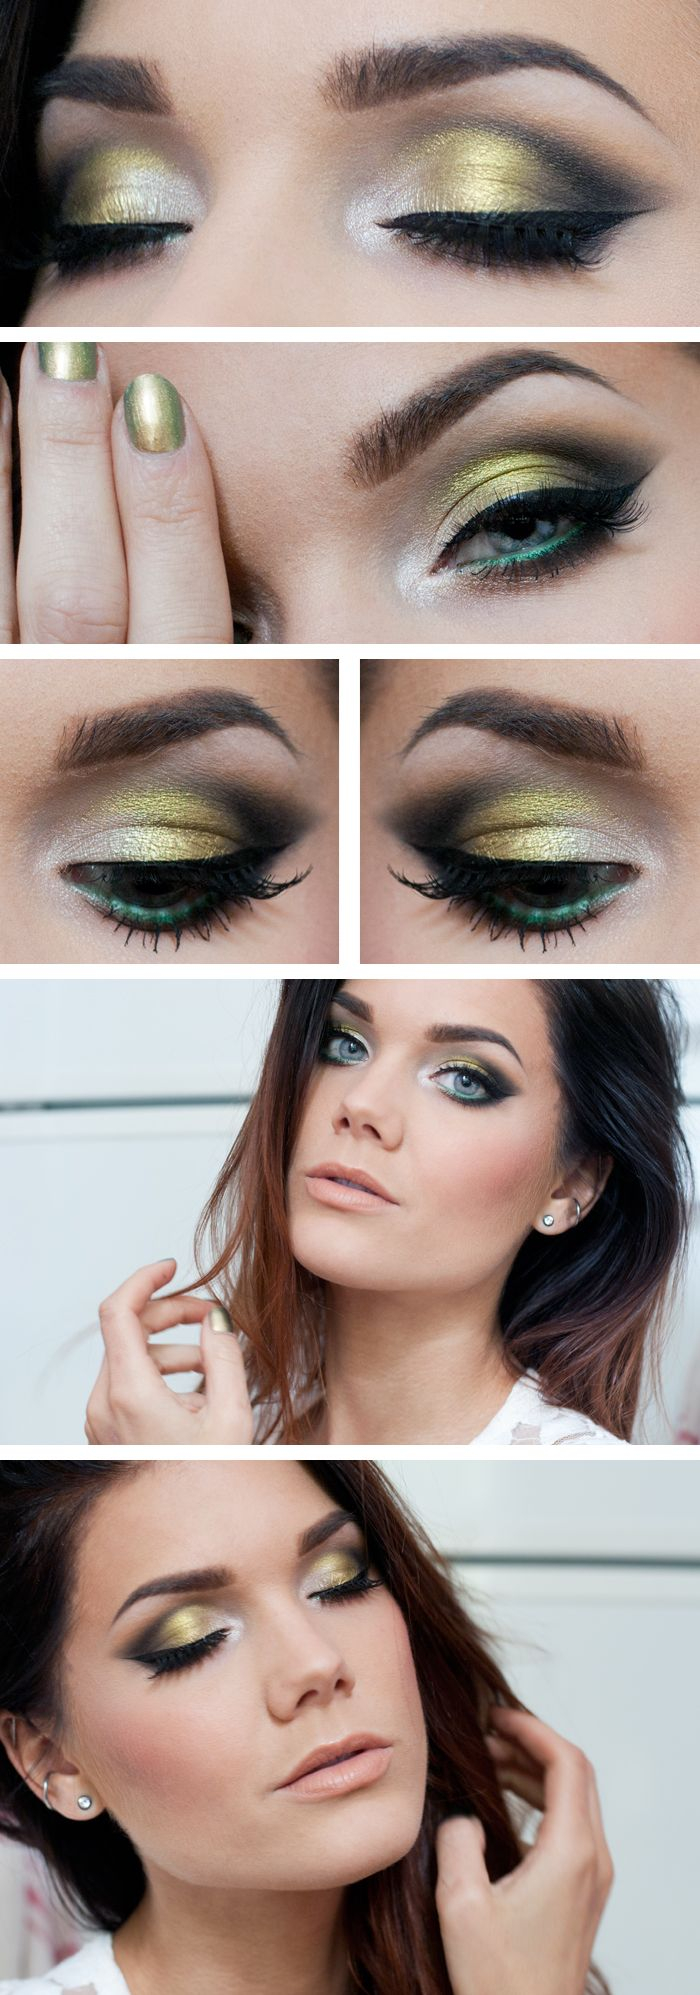 Makeup Tutorials For Green Eyes Top 10 Simple Smokey Eye Makeup Tutorials For Green Eyes